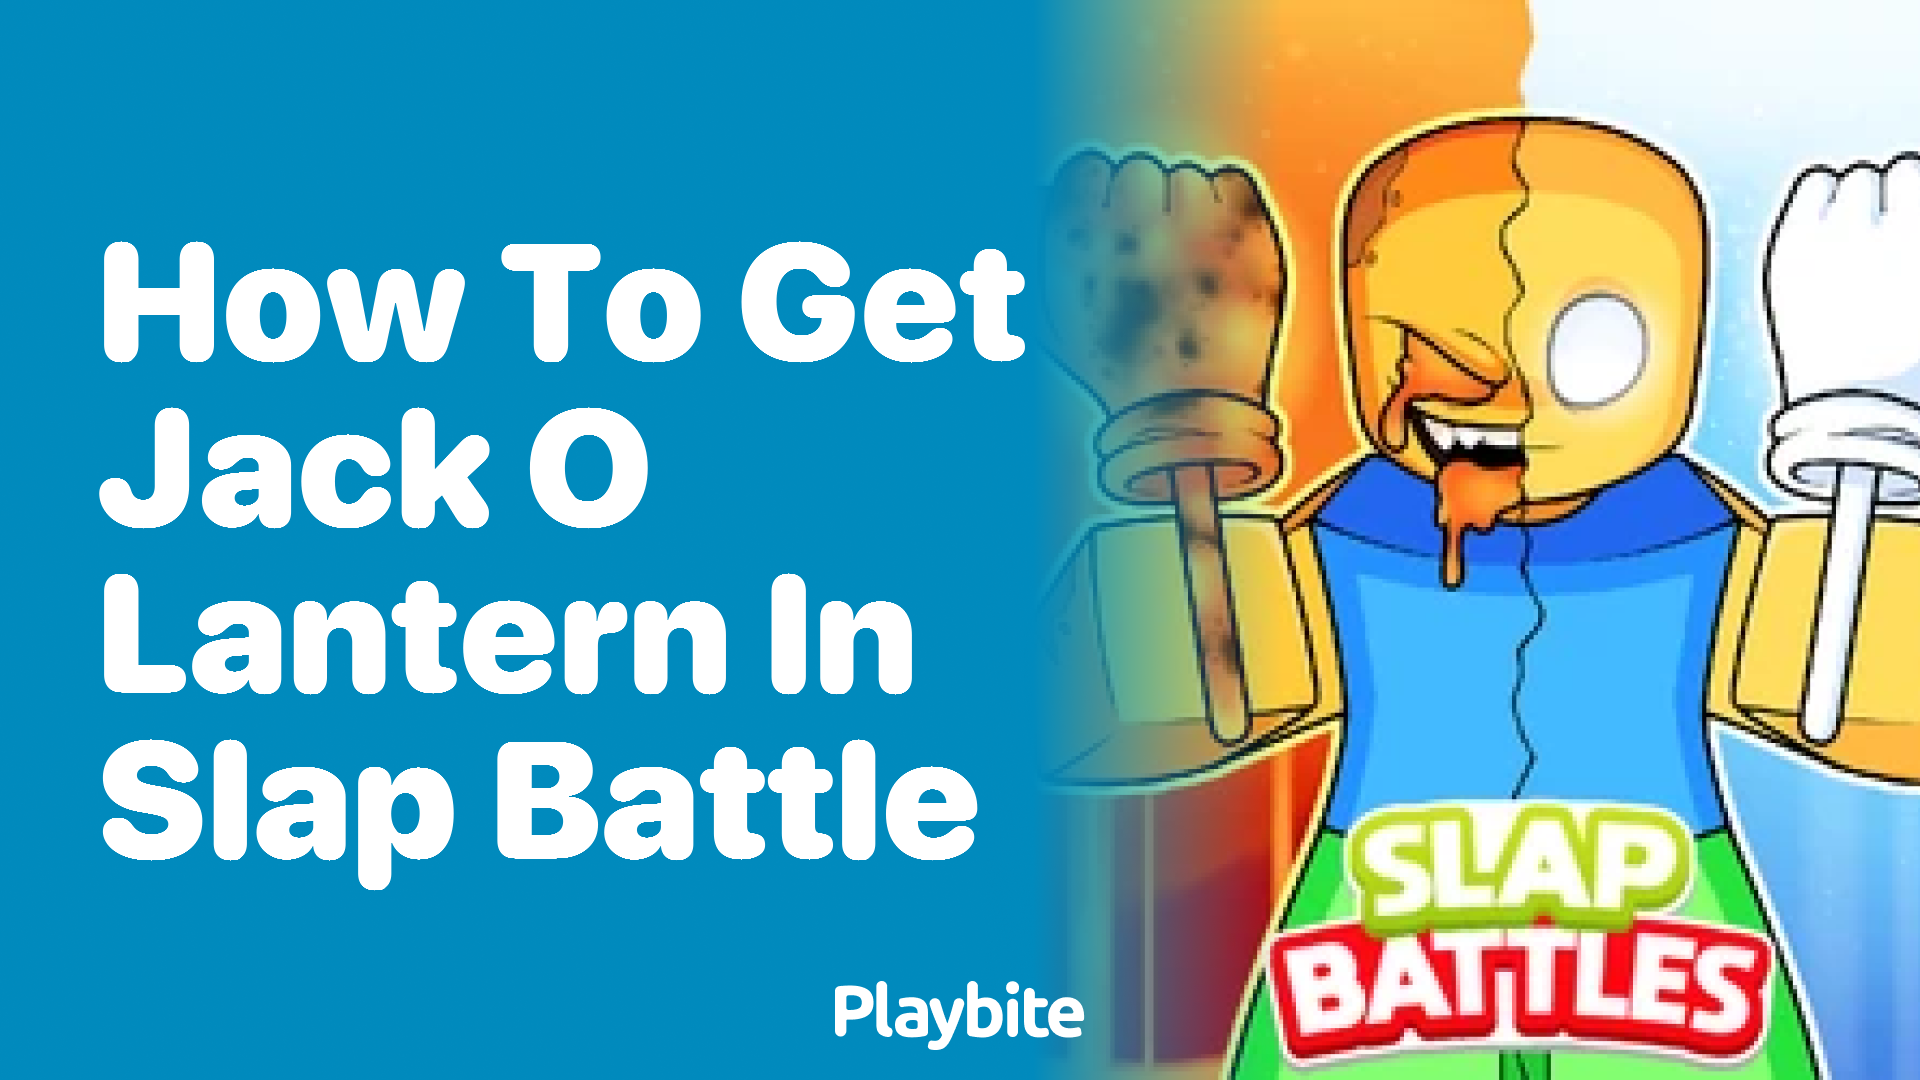 How to Get Jack O Lantern in Slap Battle